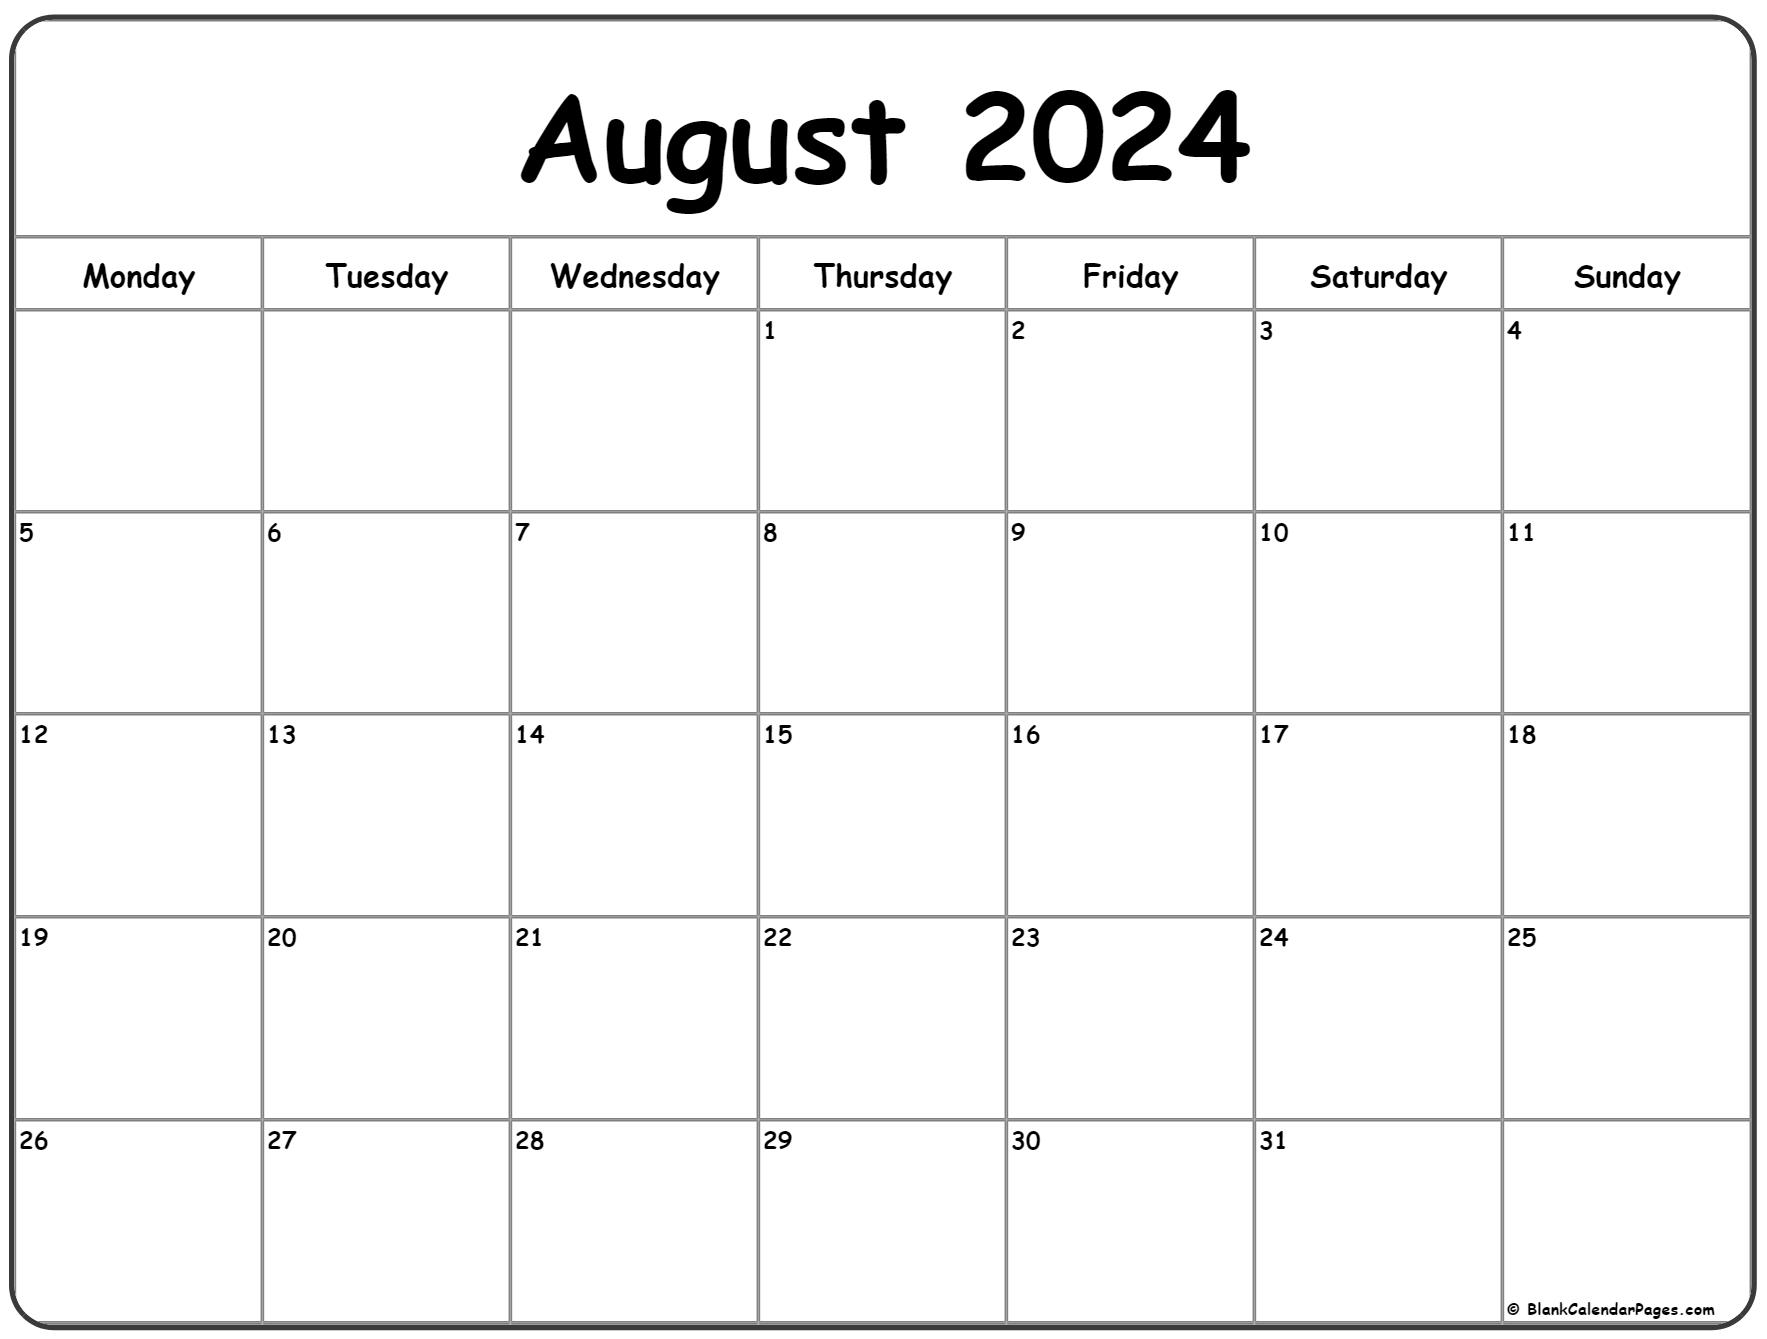 August 2021 Monday Calendar | Monday to Sunday